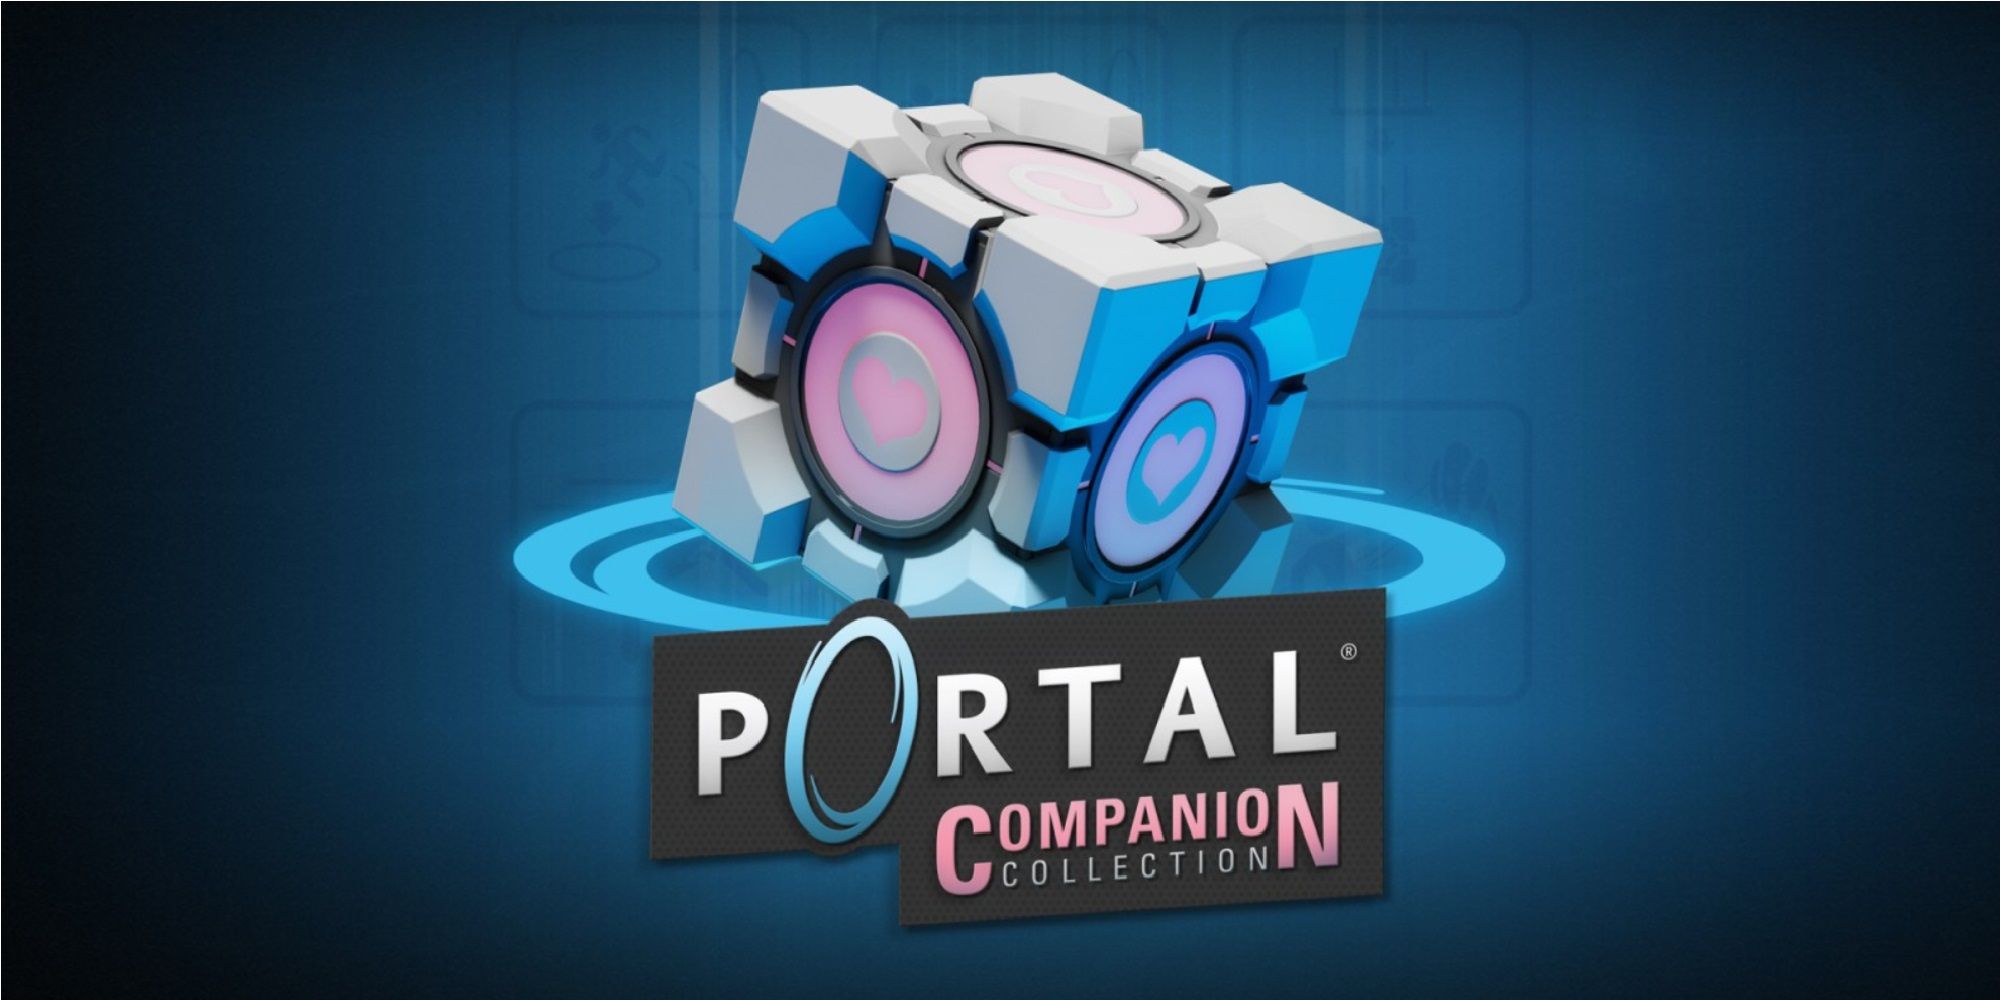 Portal: Companion Collection key art with the Companion Cube entering a blue portal.